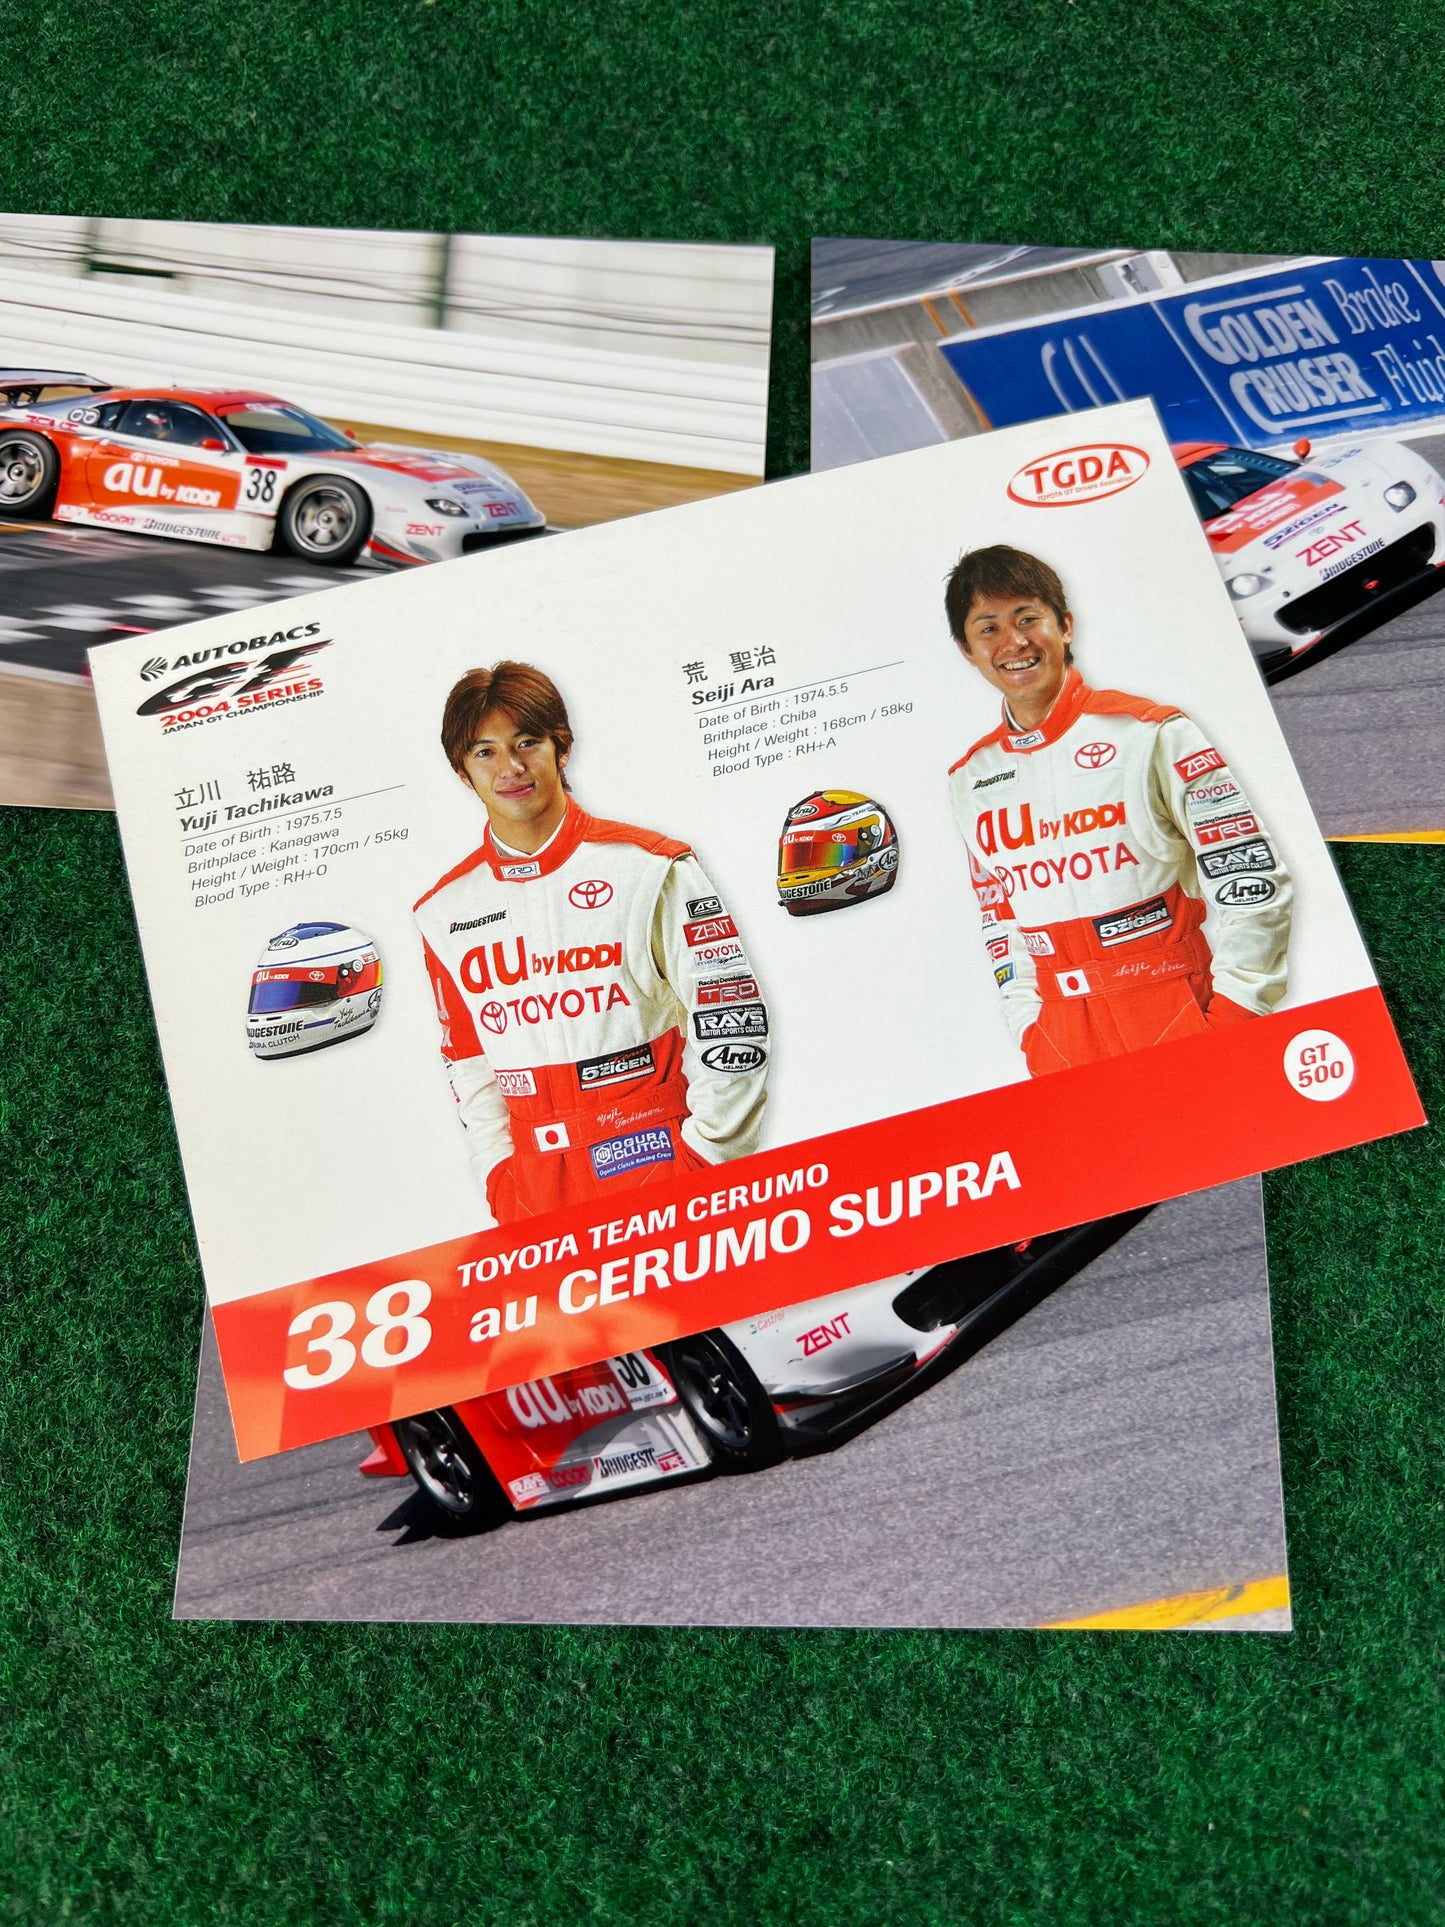 JGTC Toyota Supra - Car/Driver Cards, Test Session Photos & Sticker Sheets SET